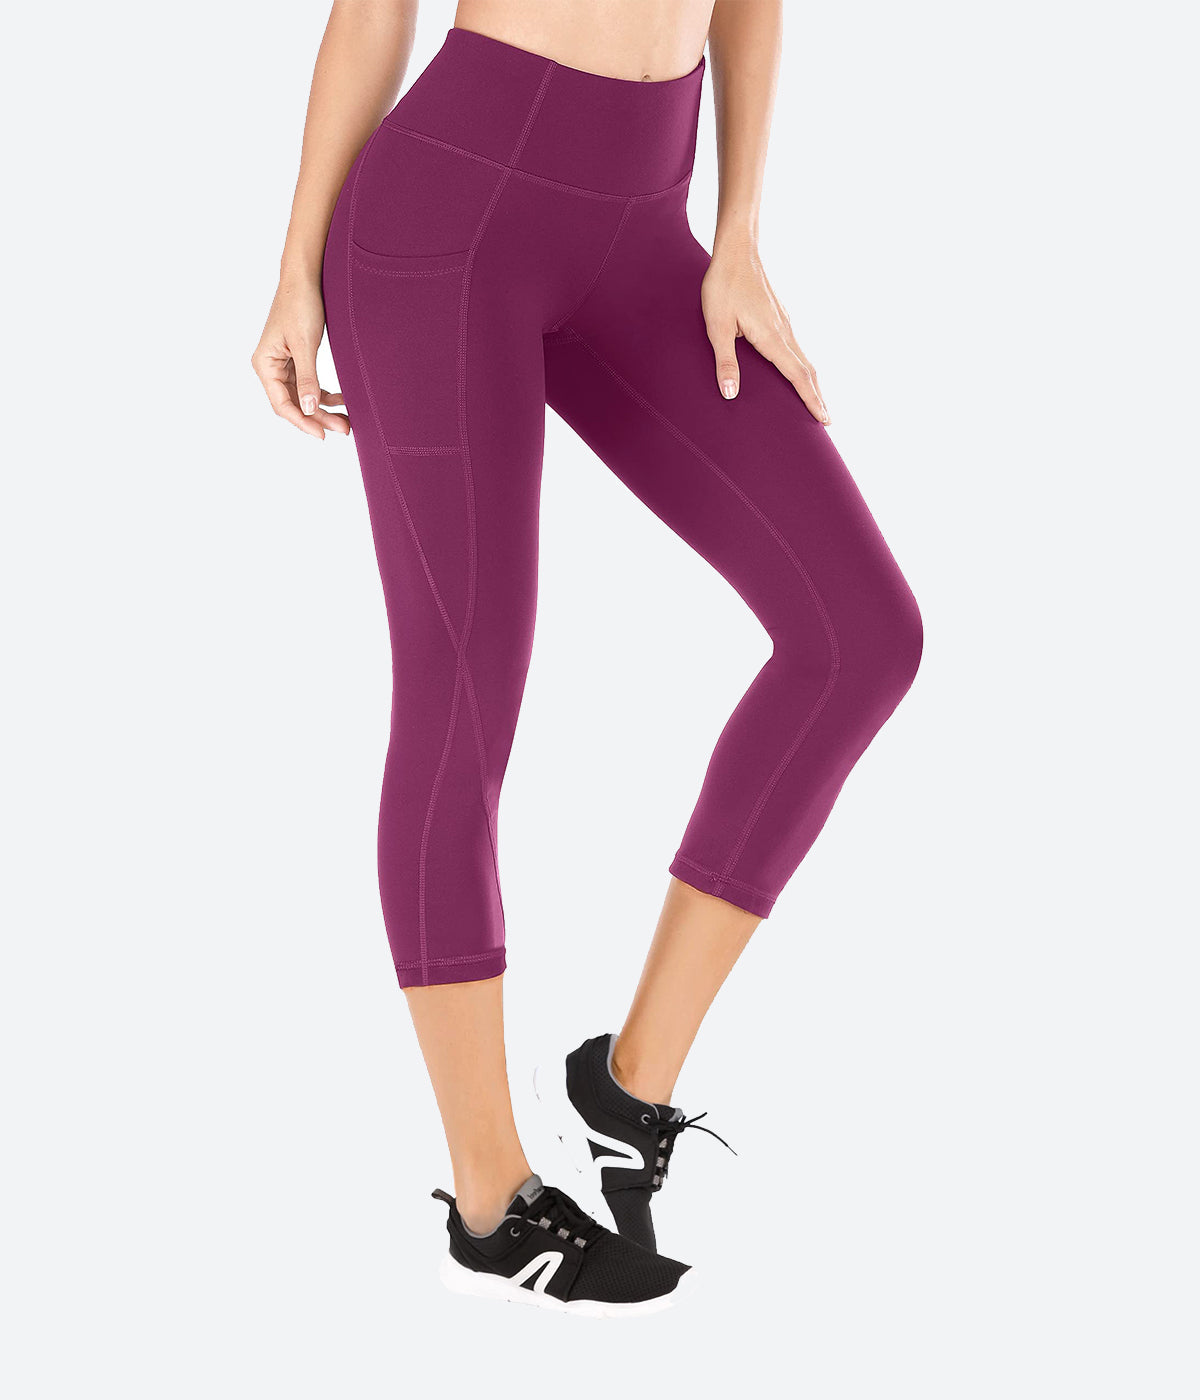 leggings for women with pockets purple : RAYPOSE Women's Workout Running  Capris Leggings Pock